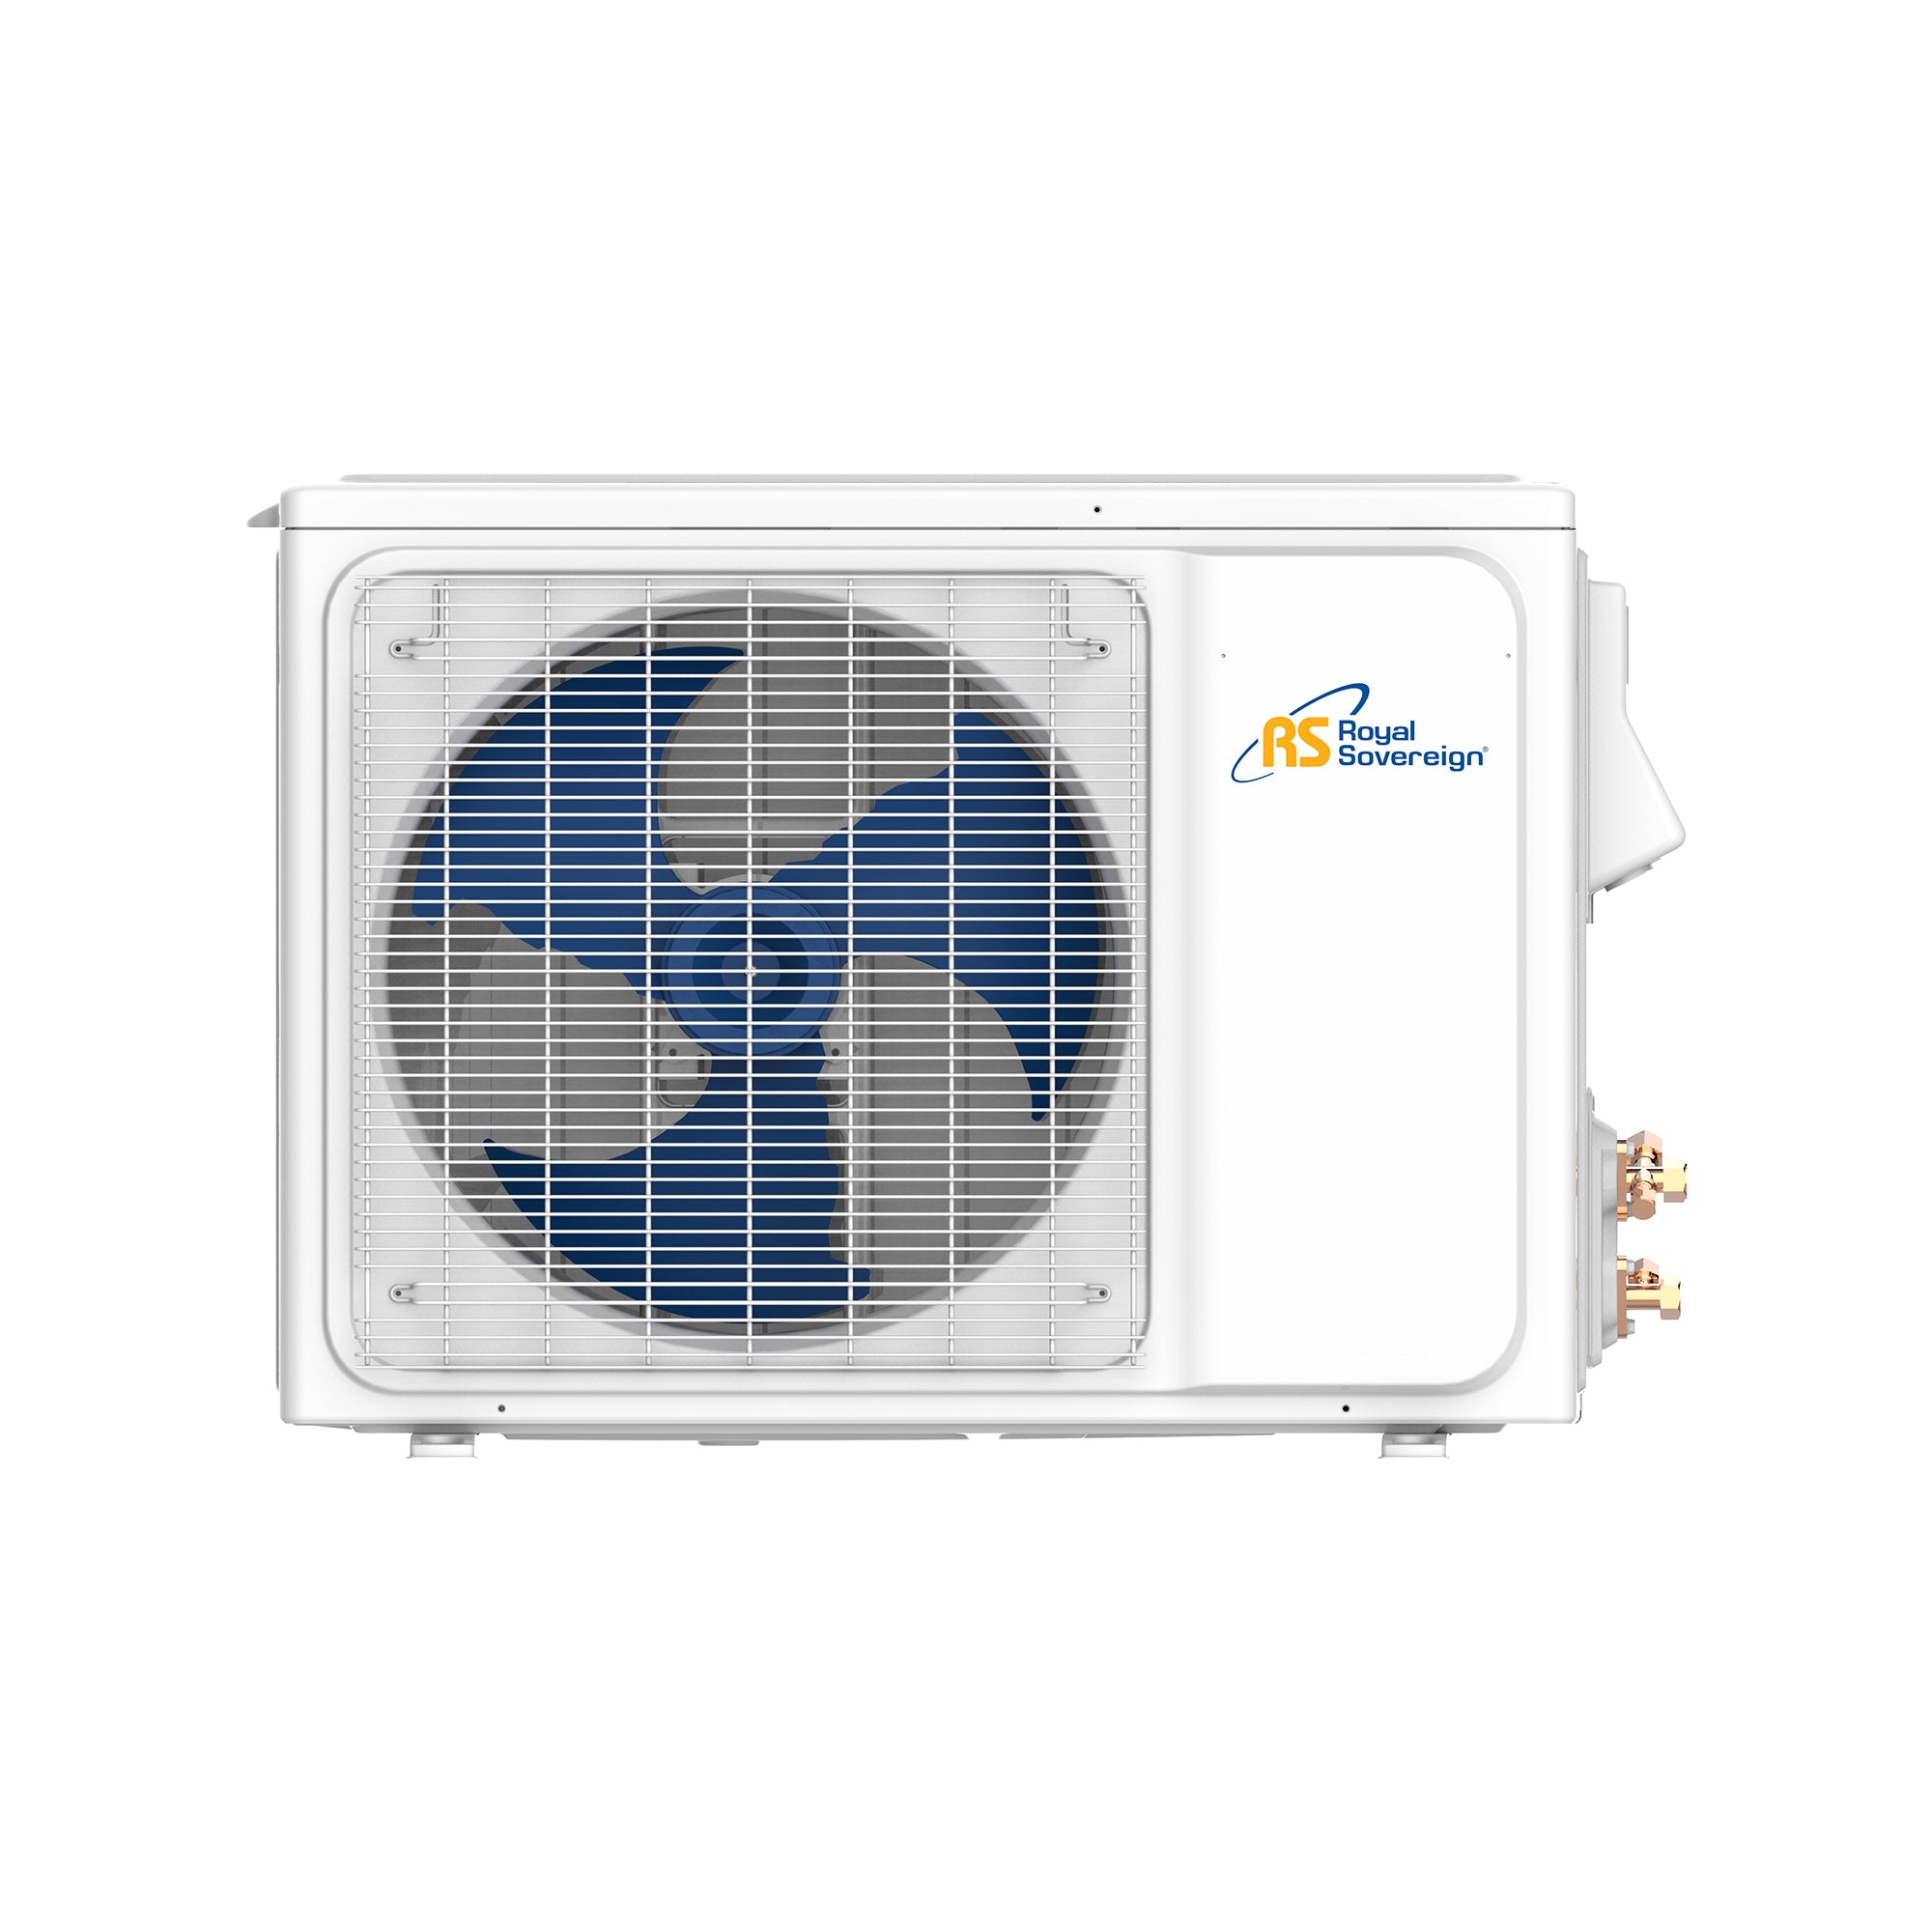 RSAC-S1217, 12,000 BTU Mini-Split Air Conditioner, Single Zone